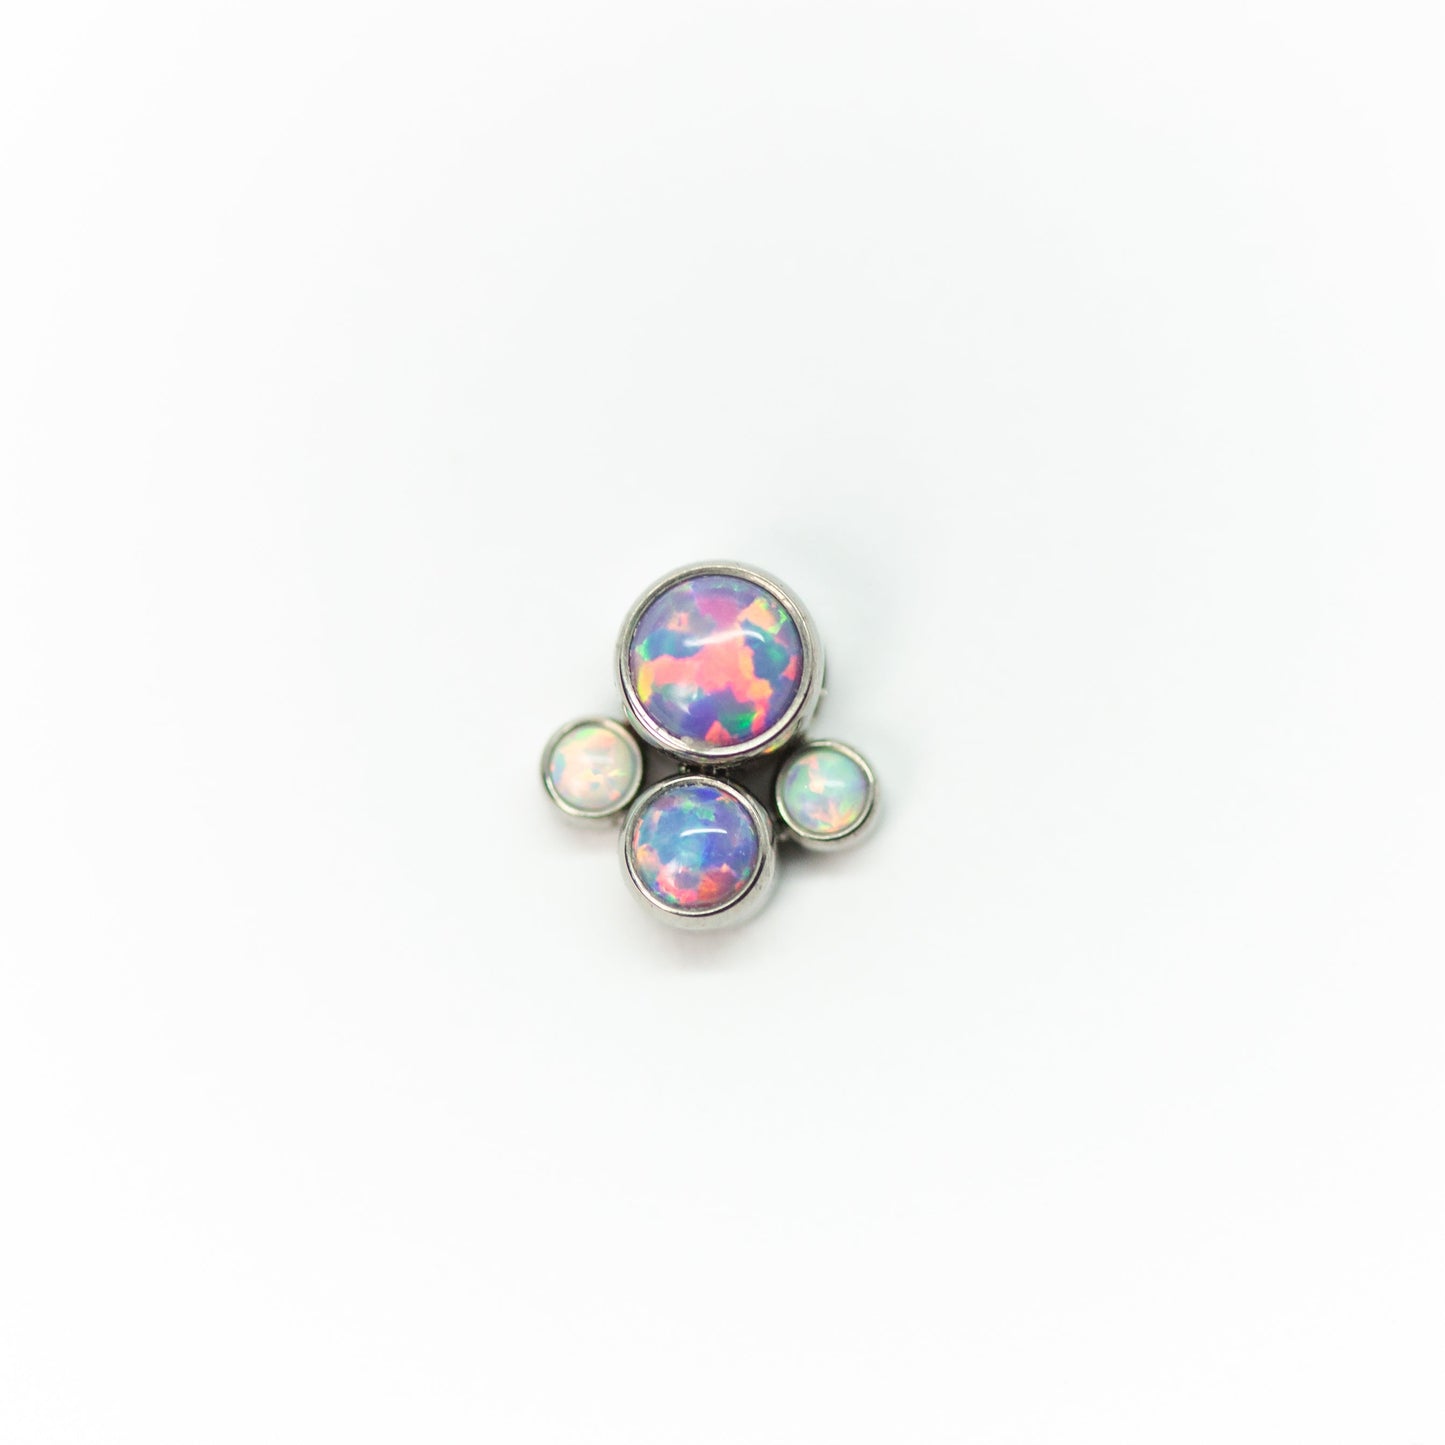 Titanium Captive Gem & Opal Bead Clusters